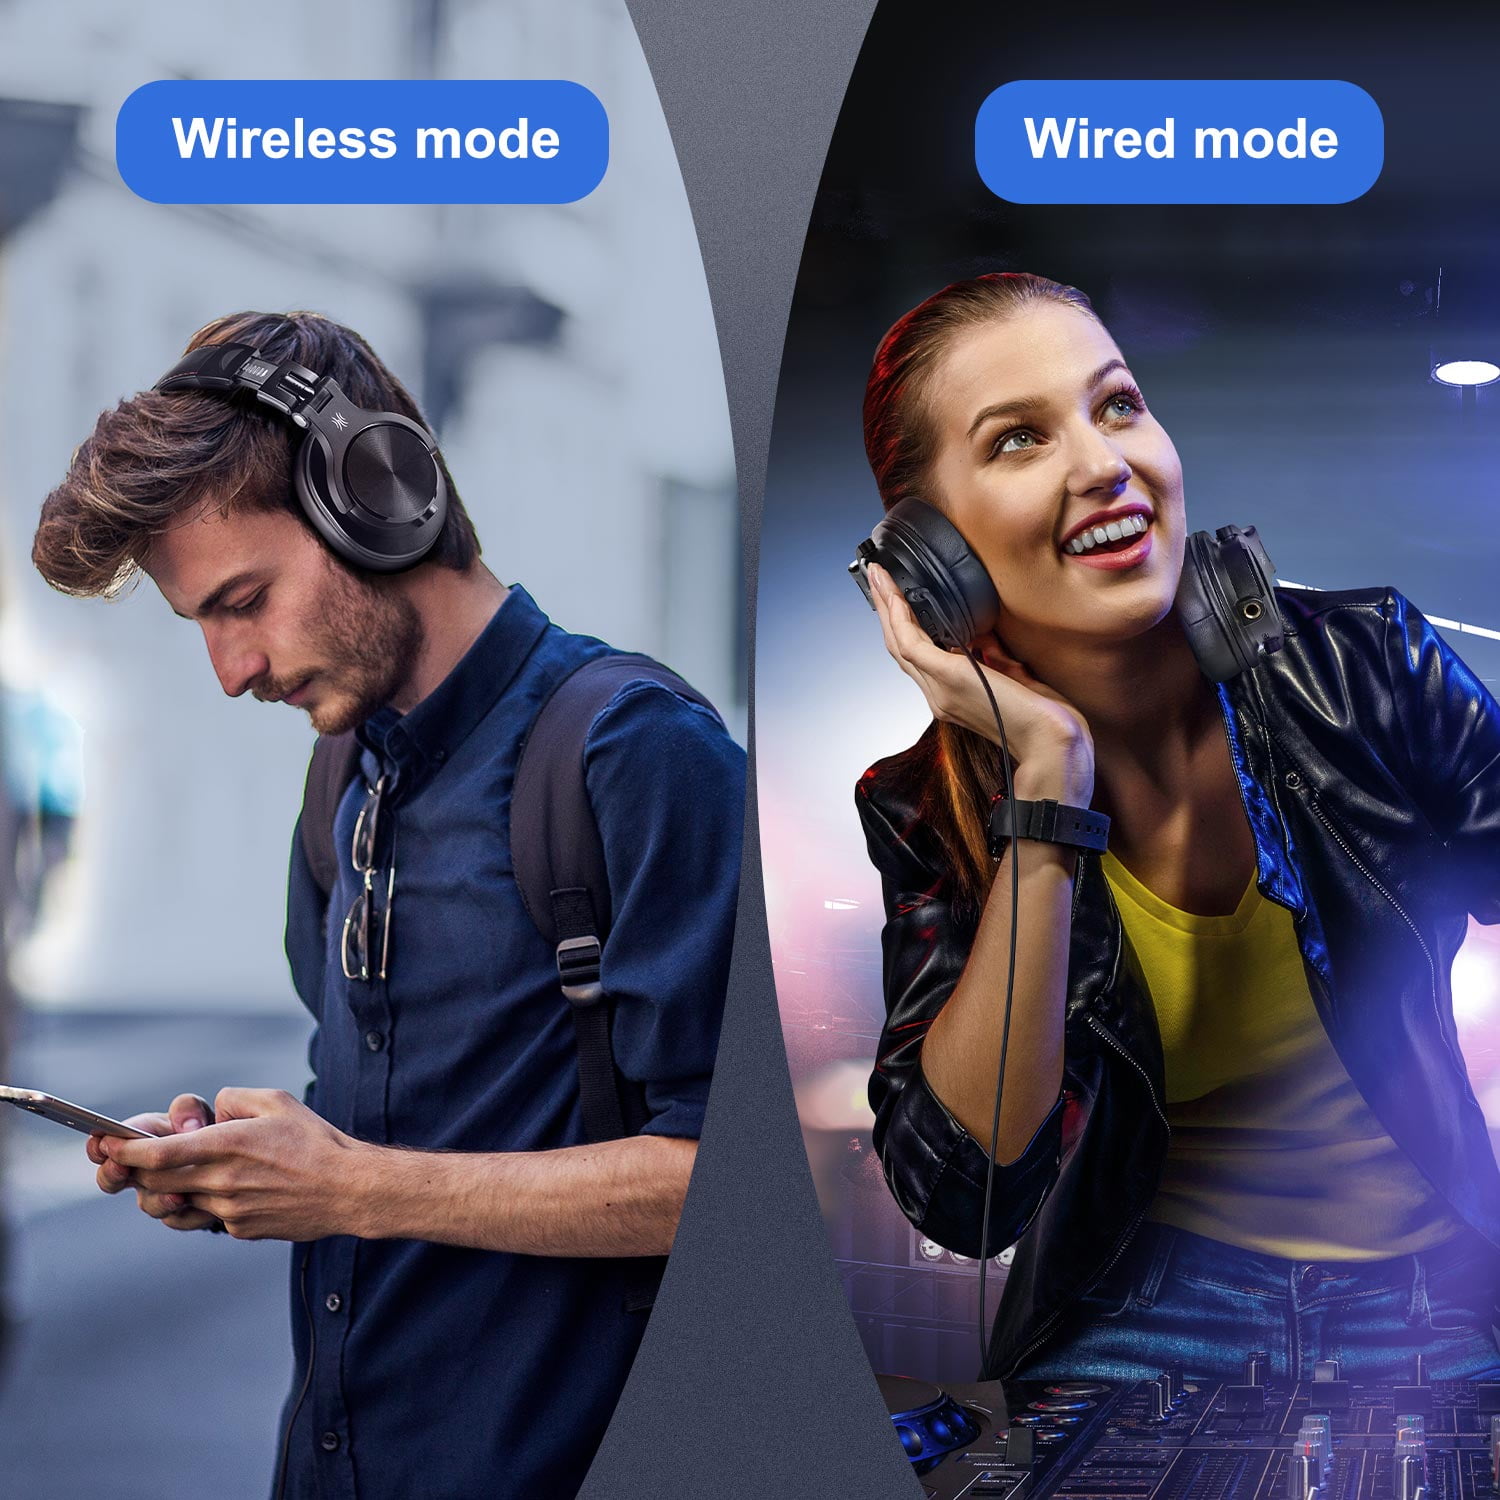 purpleapplestore on Instagram: OneOdio A70 Professional Wireless Bluetooth  Stereo Headphone – Black KSh7,800